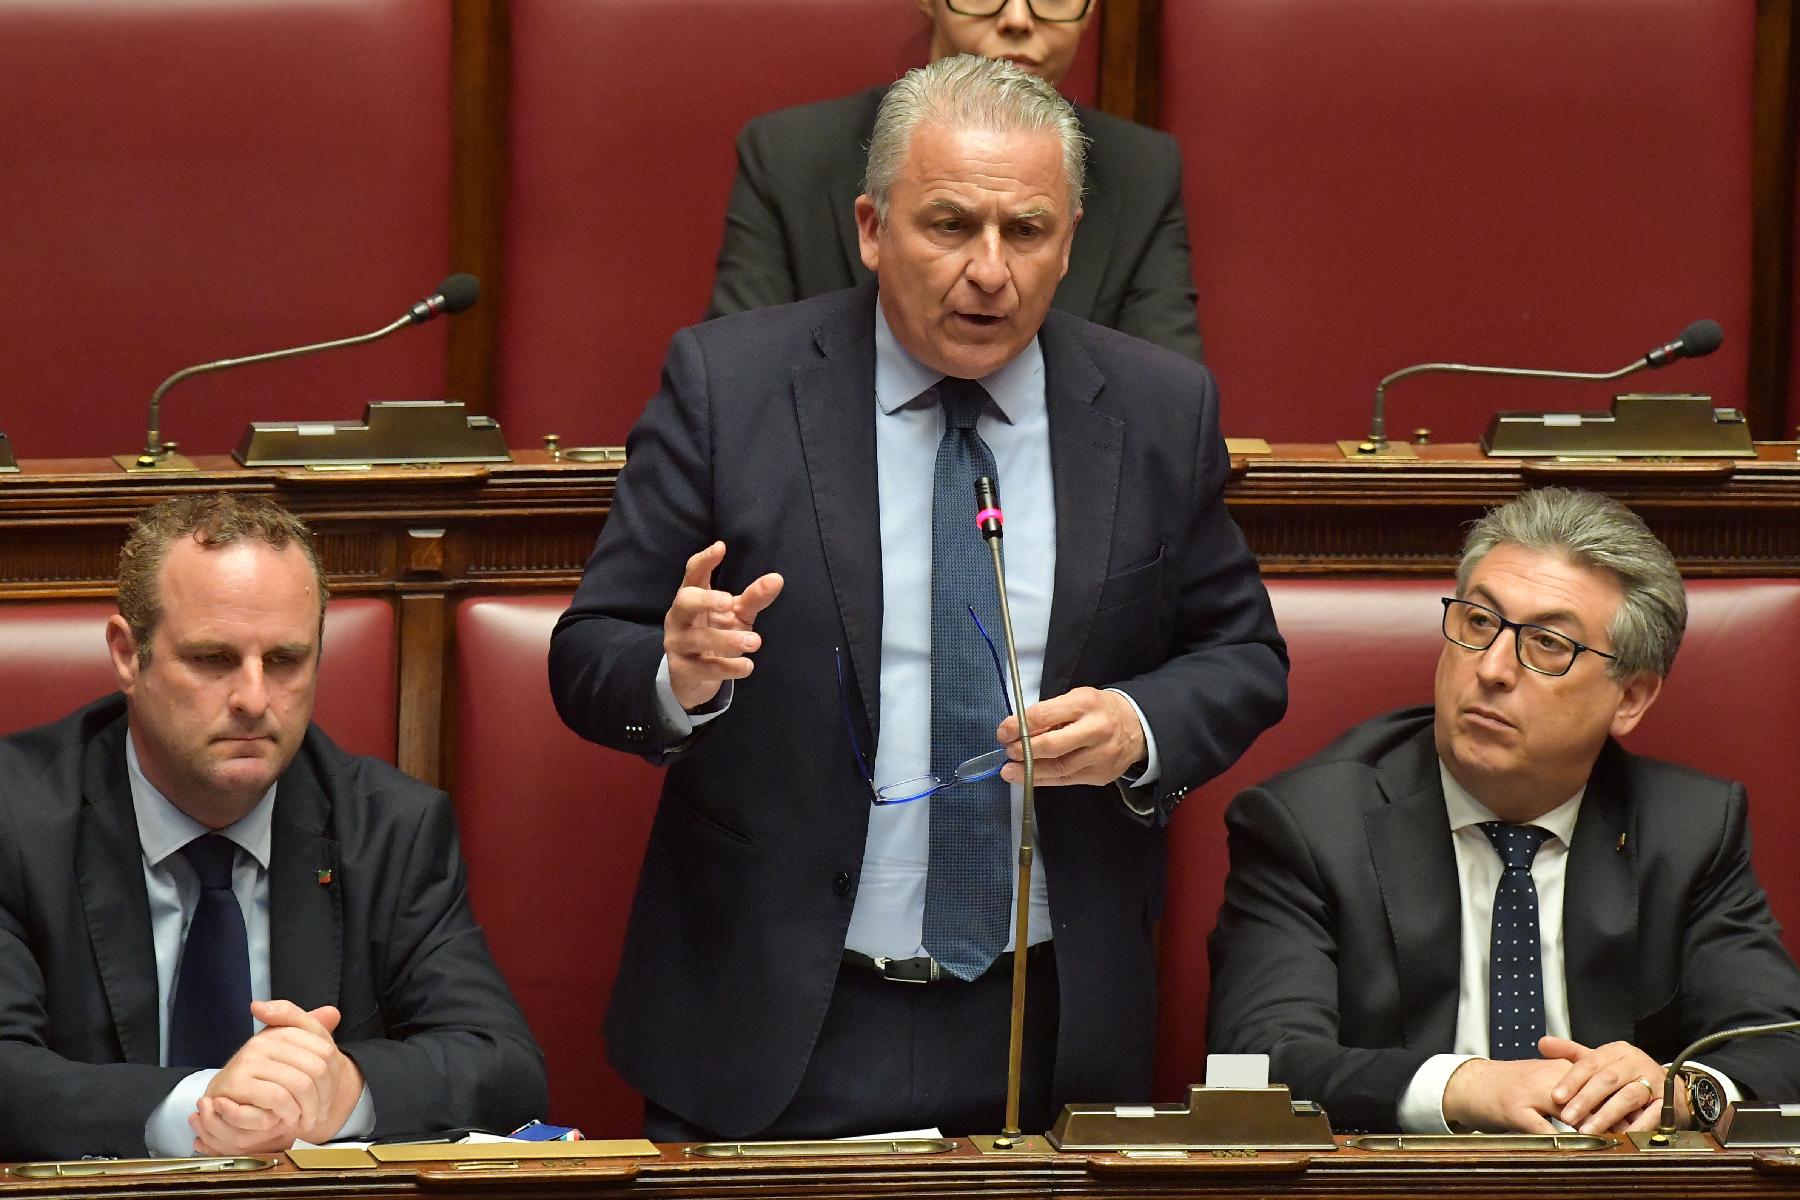 Intervento del deputato Giandiego Gatta